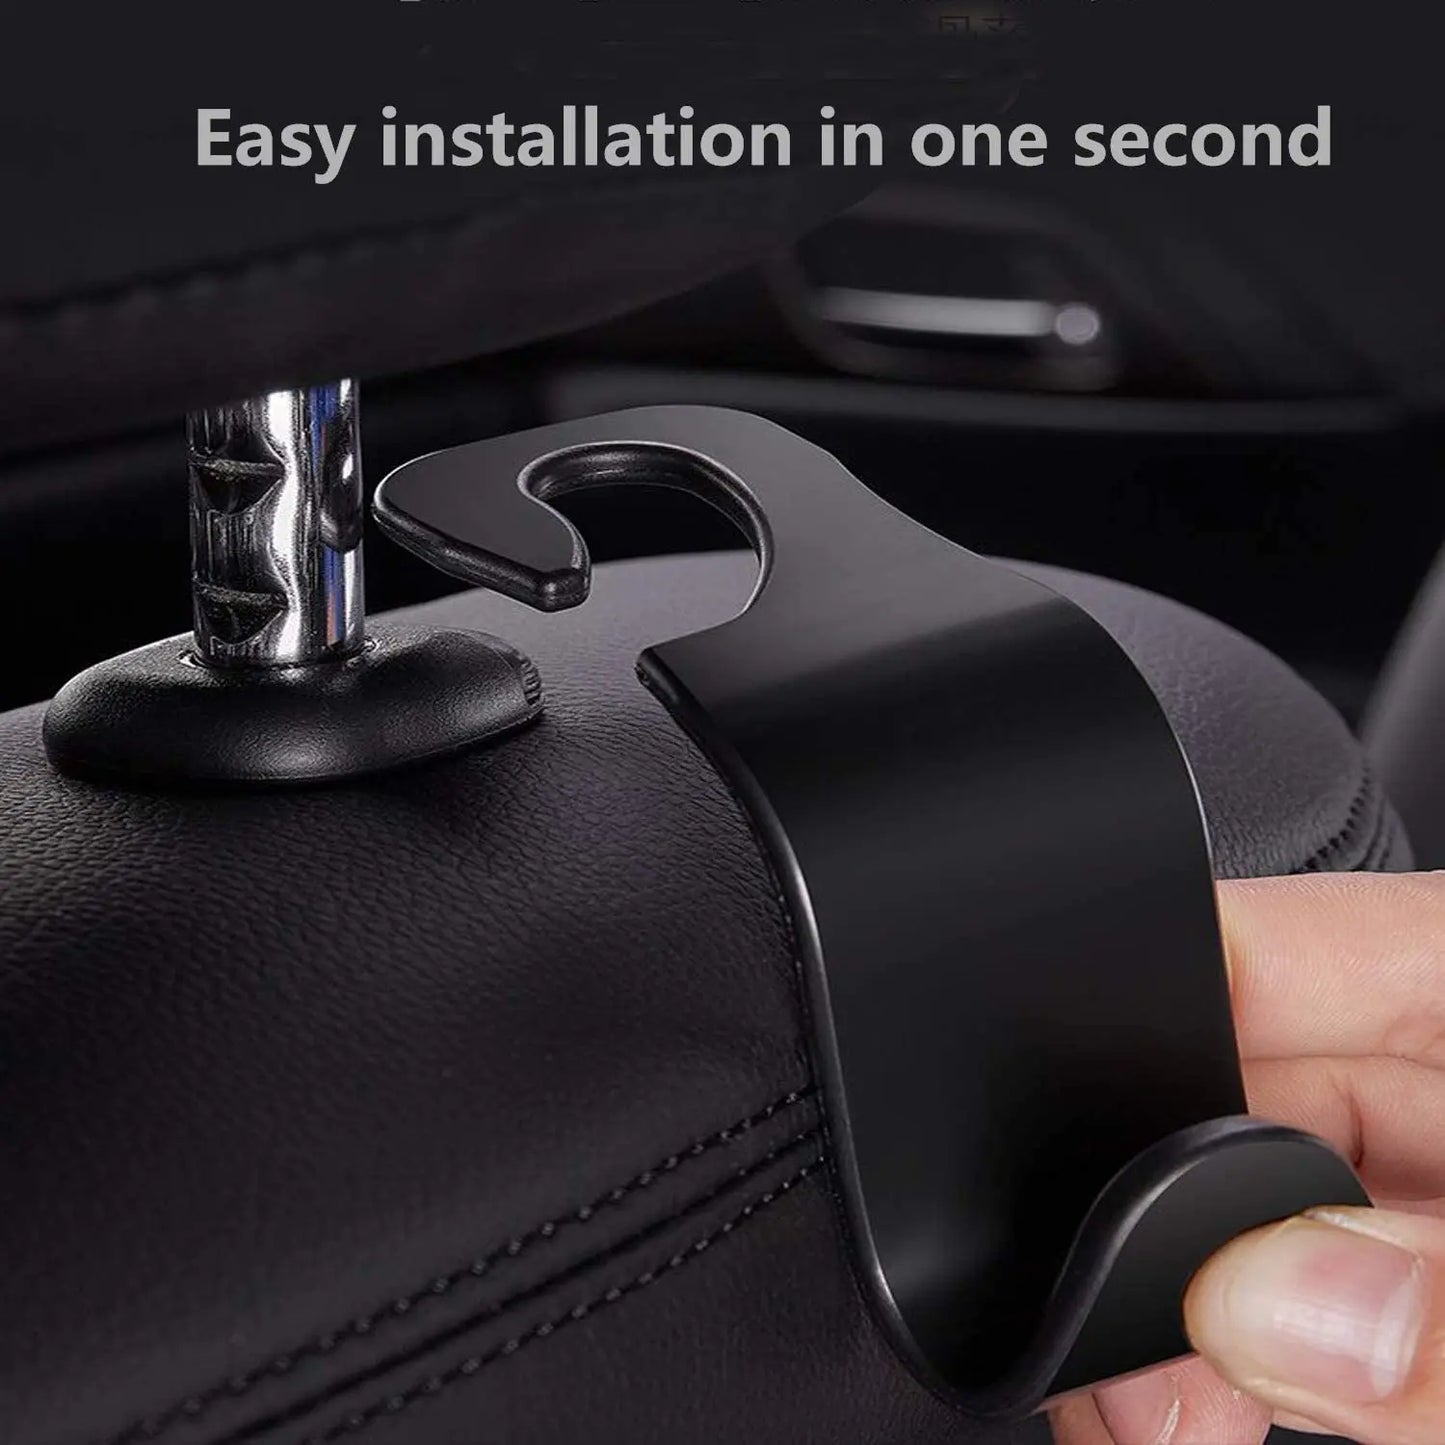 4Pack Headrest Hooks for car - Bags Car Clips Front Seat Headrest Organizer Holder Auto Fastener Hangers Car Storage Interior Accessories